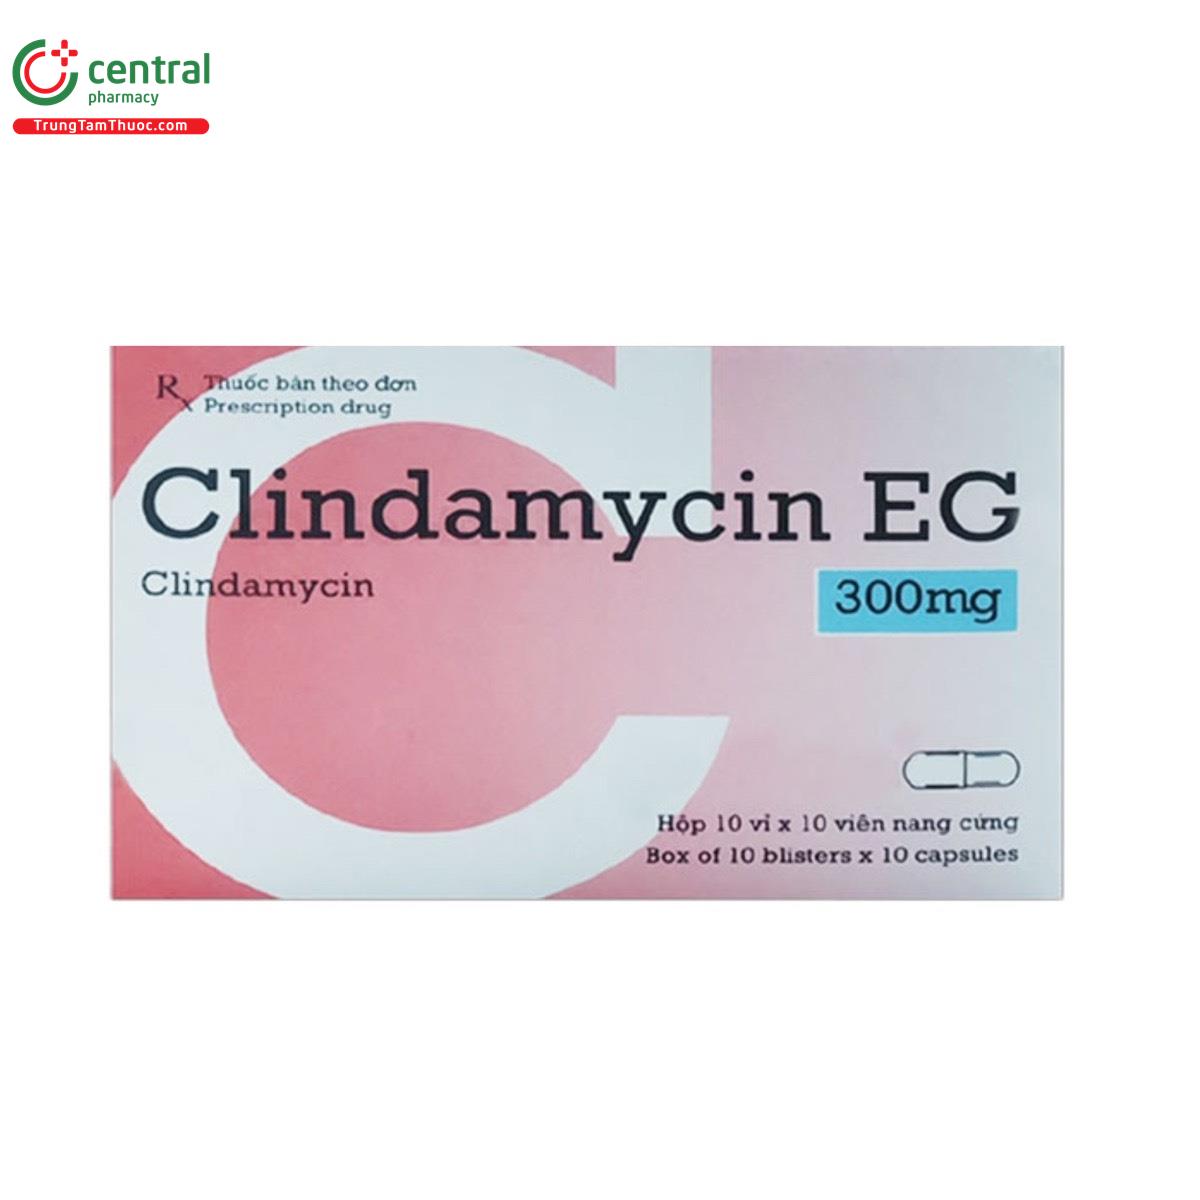 clindamycin eg 300mg 10 I3470